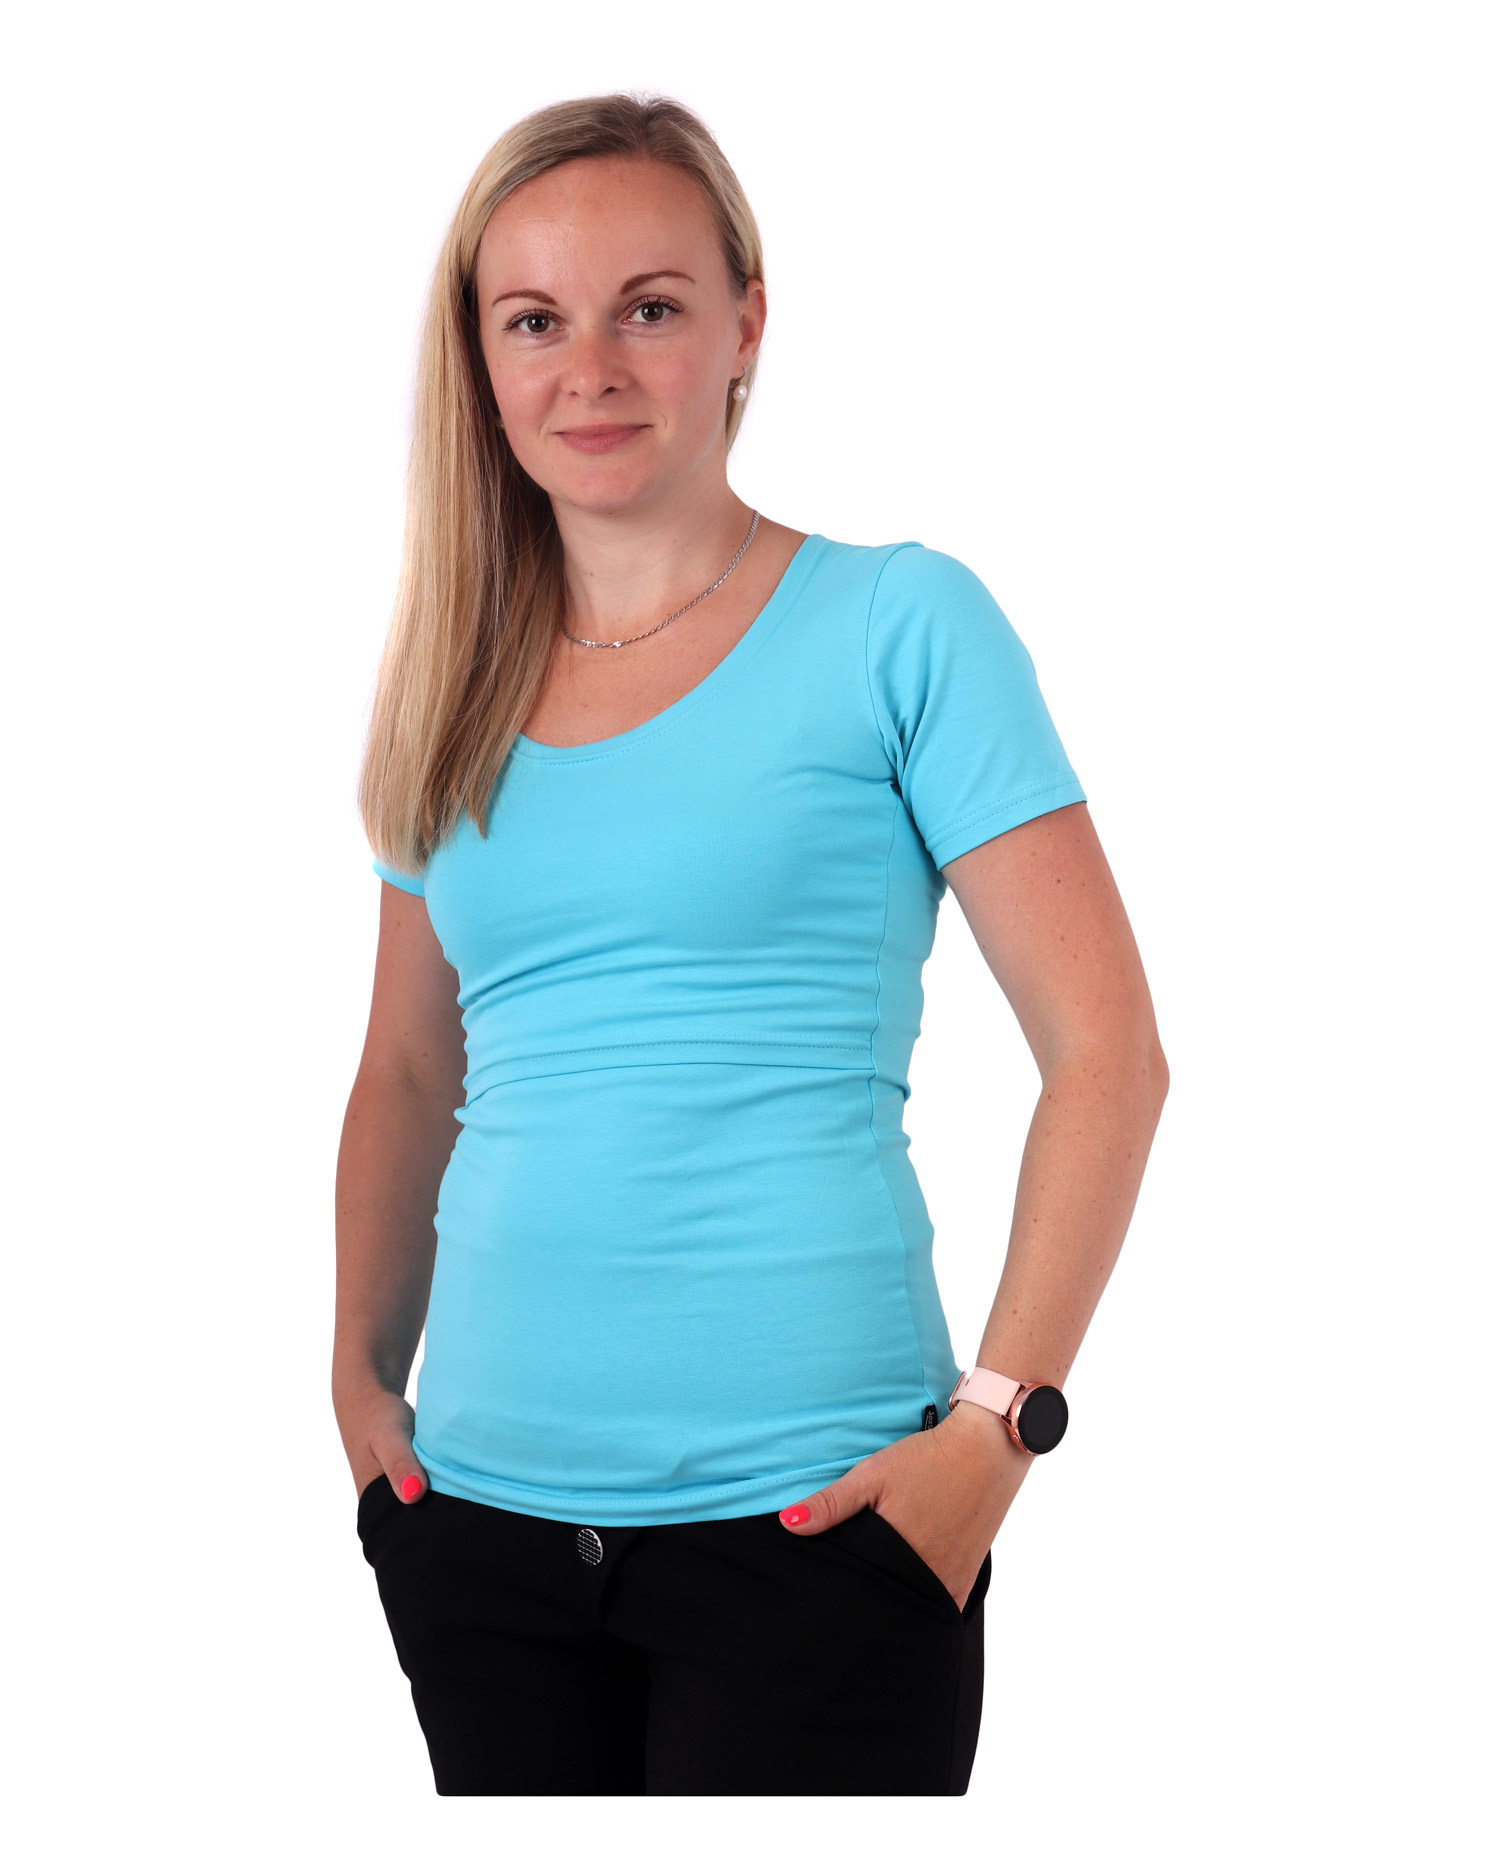 Breast-feeding T-shirt Katerina, short sleeves, TURQUOISE